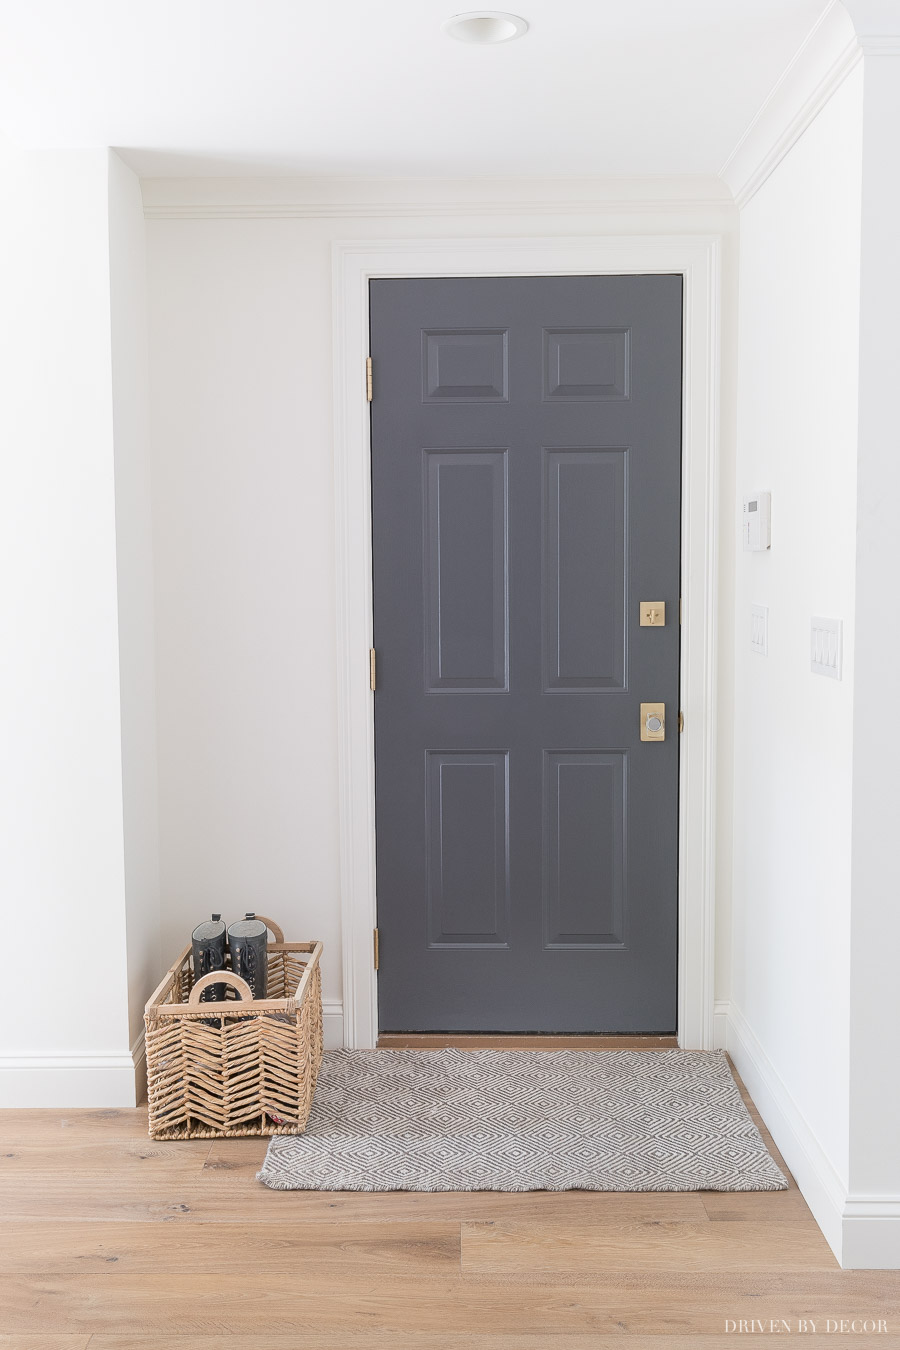 How to Paint a Door: My Best Tips for Painting Interior Doors! - Driven